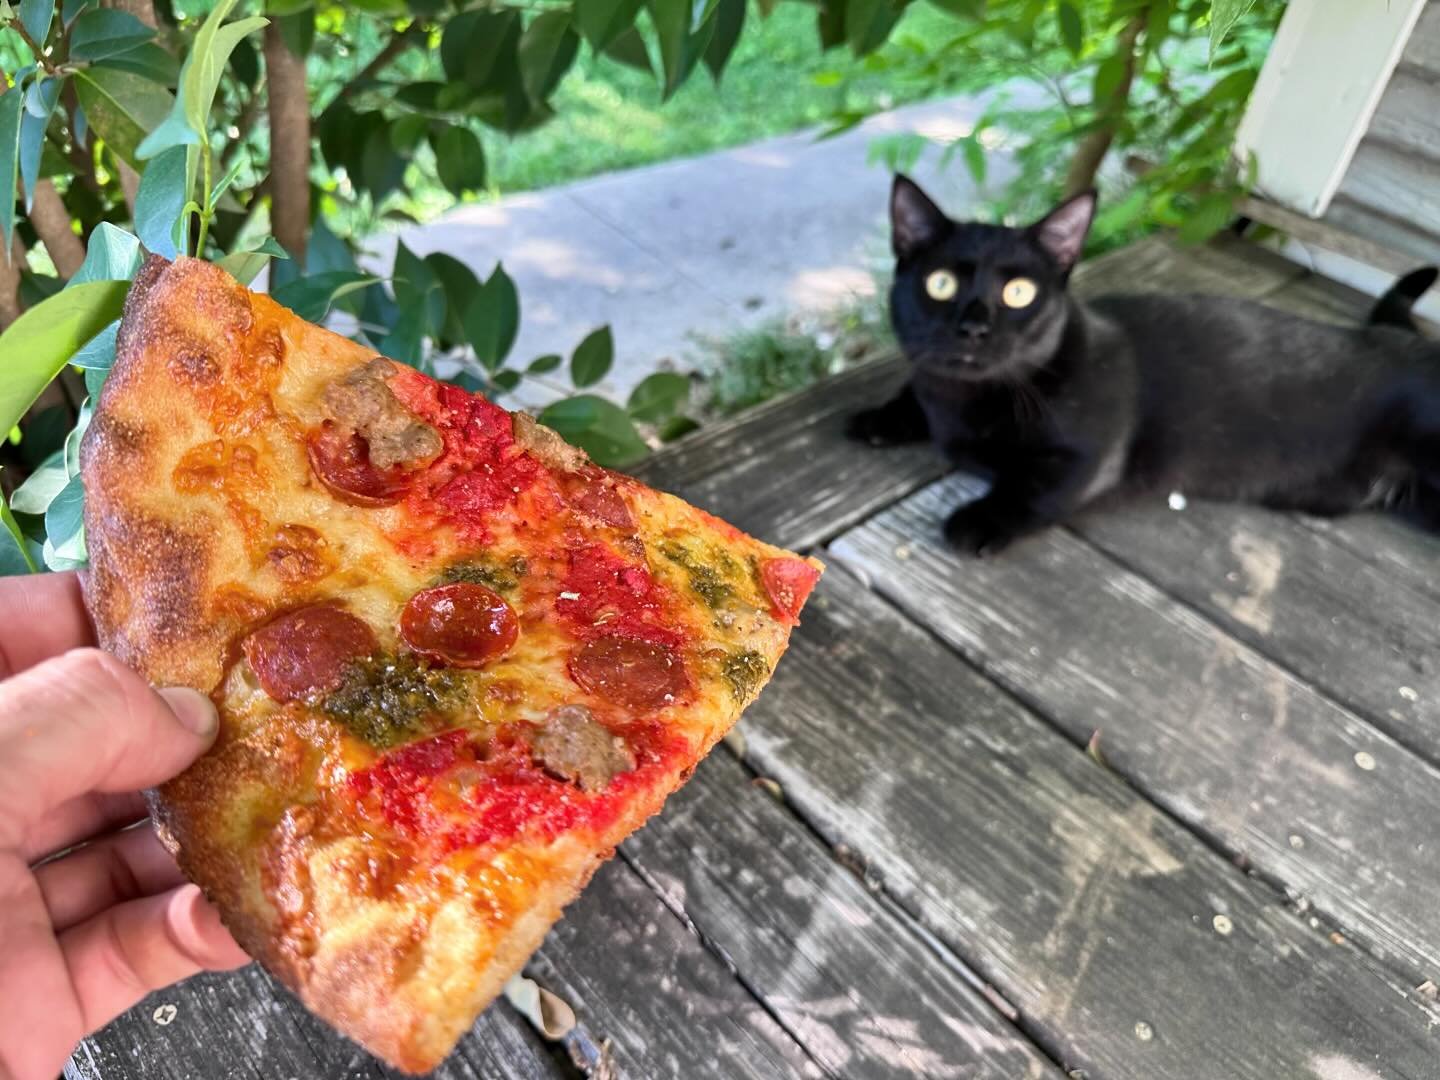 Pizza &amp; a black cat, doesn&rsquo;t get much better than that 😻&hellip;

🍕🐈&zwj;⬛: Ippo / Lil&rsquo; Bagheera
📸: @drumrug 
.
.
.
#feralpizza #feralpizzaatx #austinpizza #atxpizza #pizzaatx #atxfoodtruck #austintexas #austintx #atx #hydepark #h